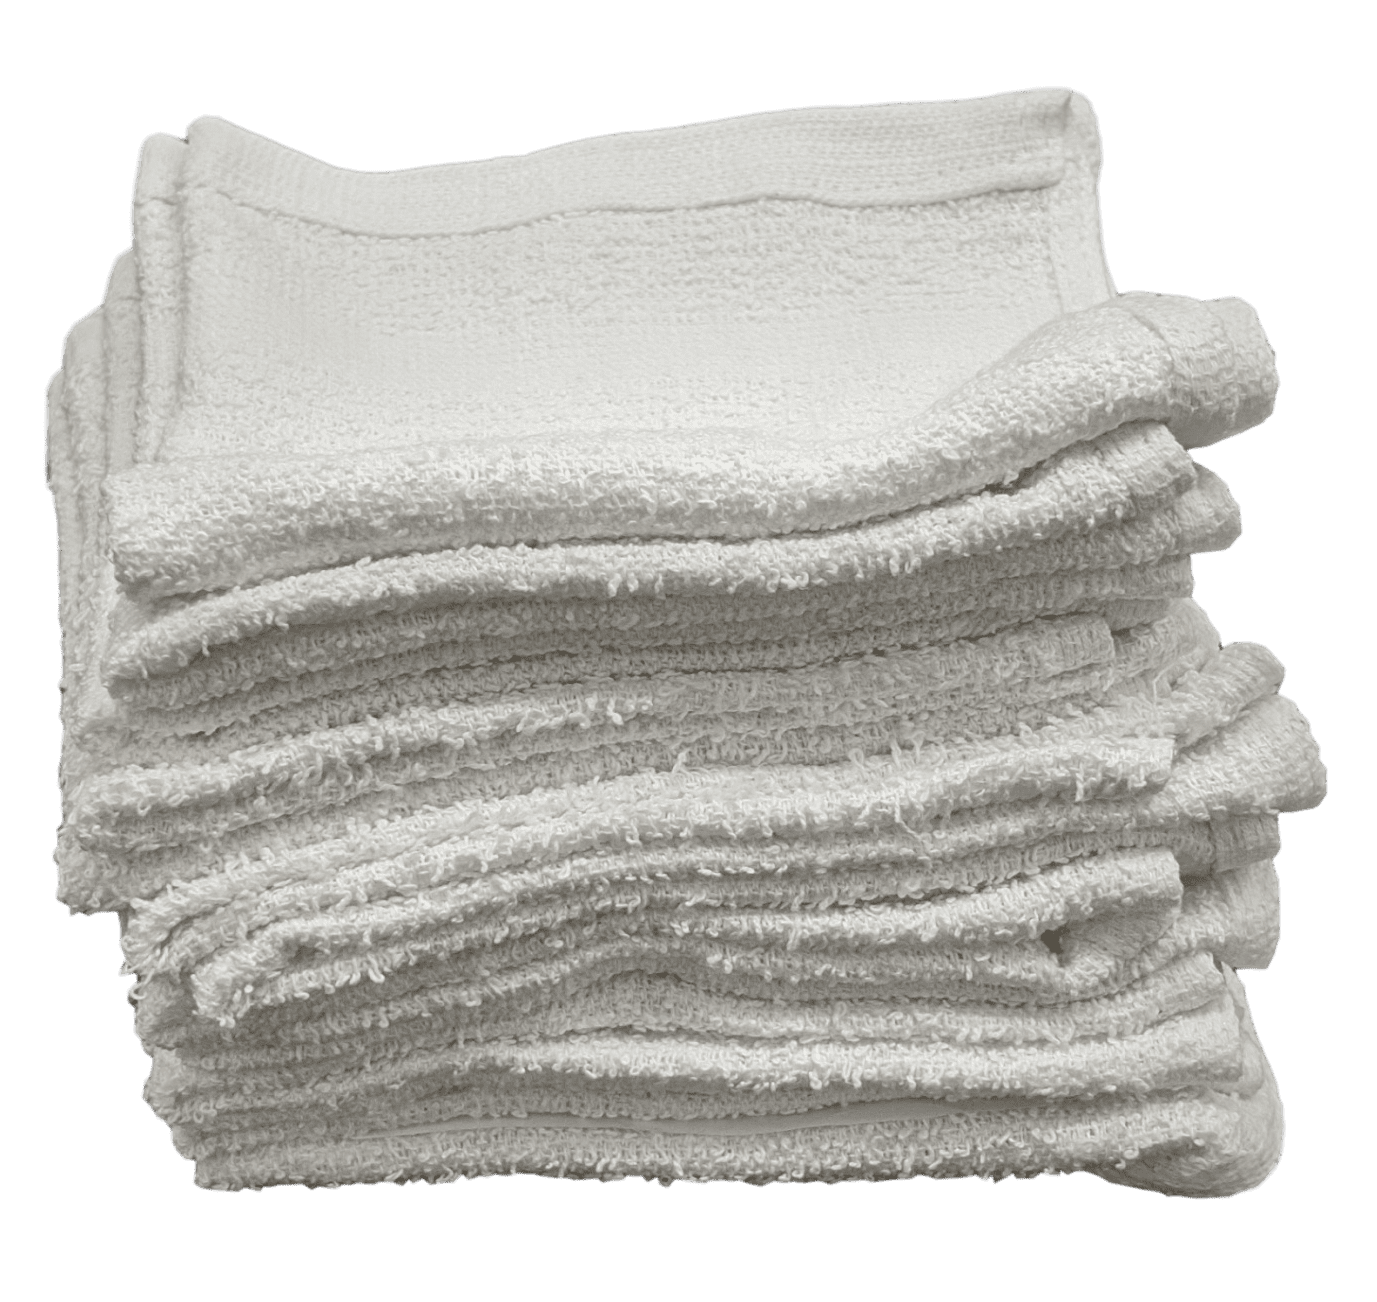 600 New White Soft Cotton Wash cloths 12x12 50 Dozen Bulk Case 1 Lb Quality 